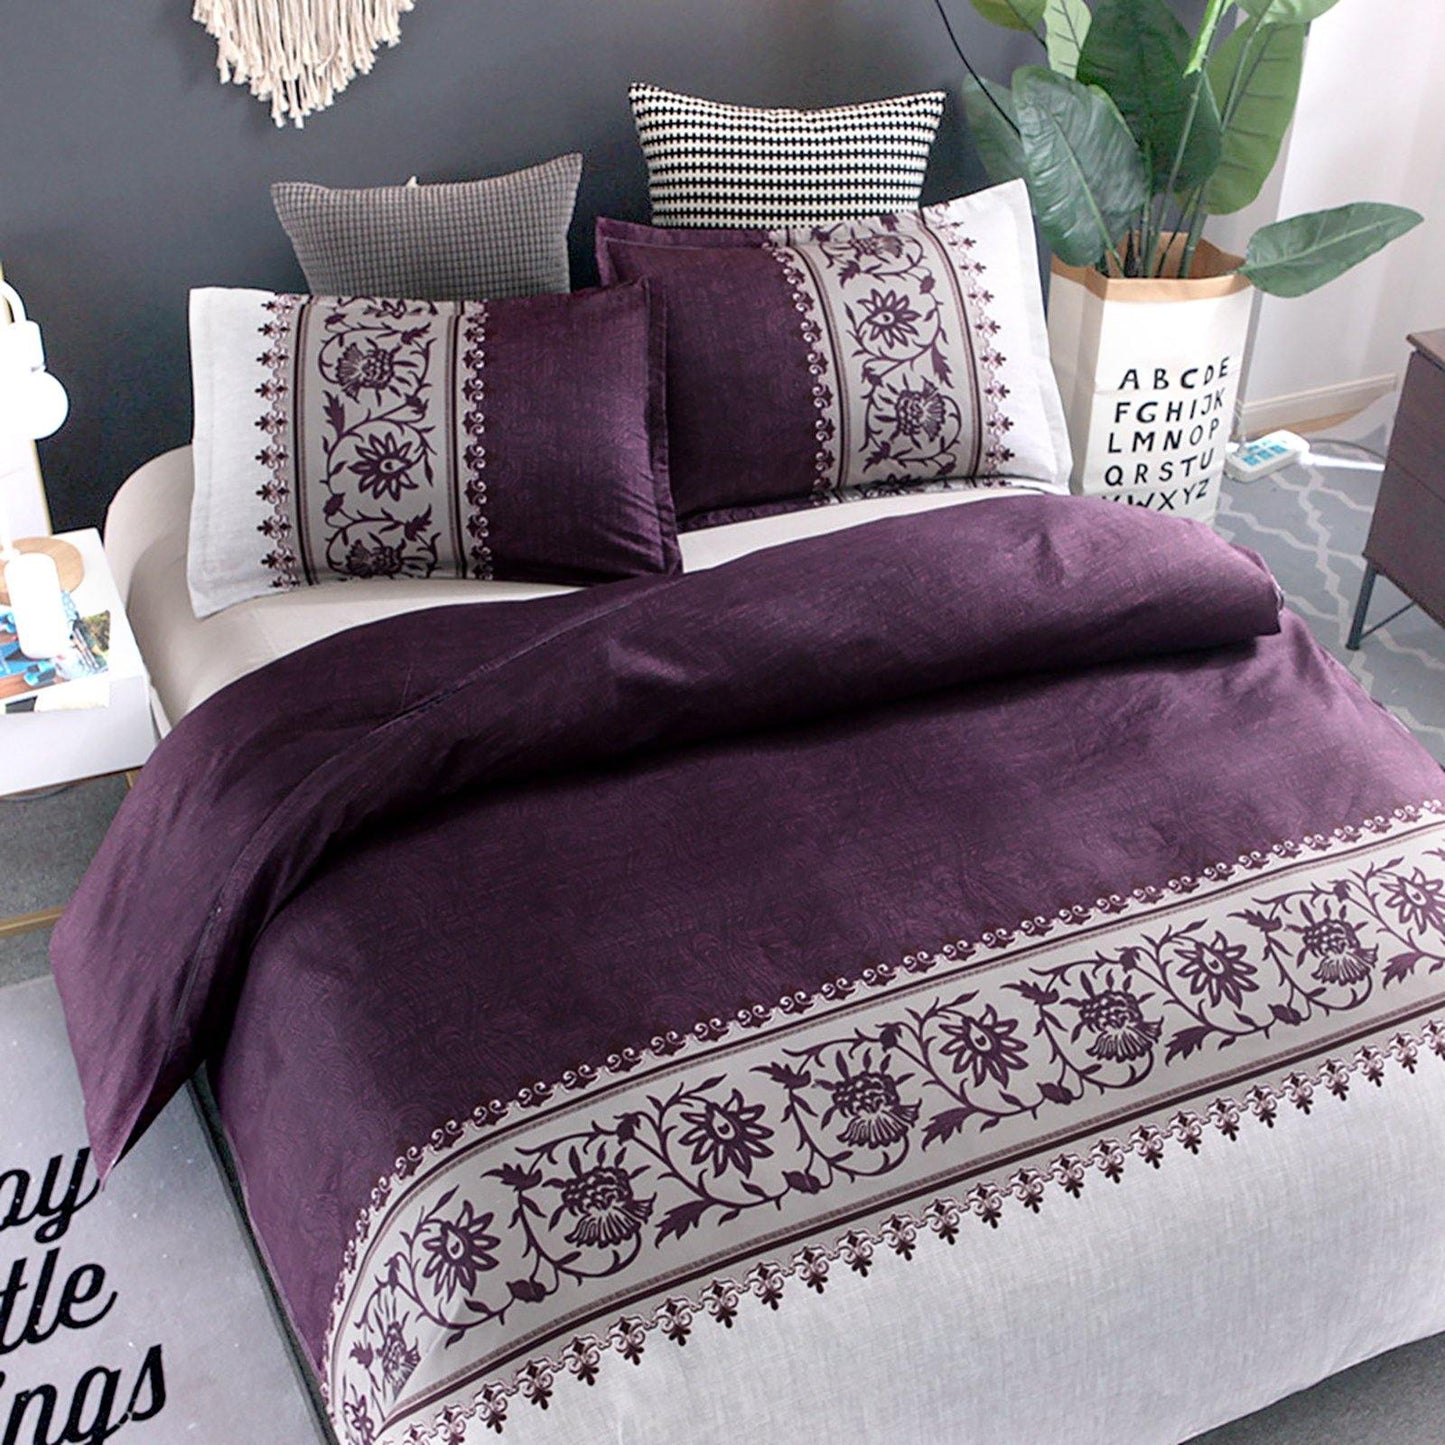 WONGS BEDDING Alternate colors Comforter set 3 Pieces Bedding Comforter with 2 Pillow Cases - Wongs bedding